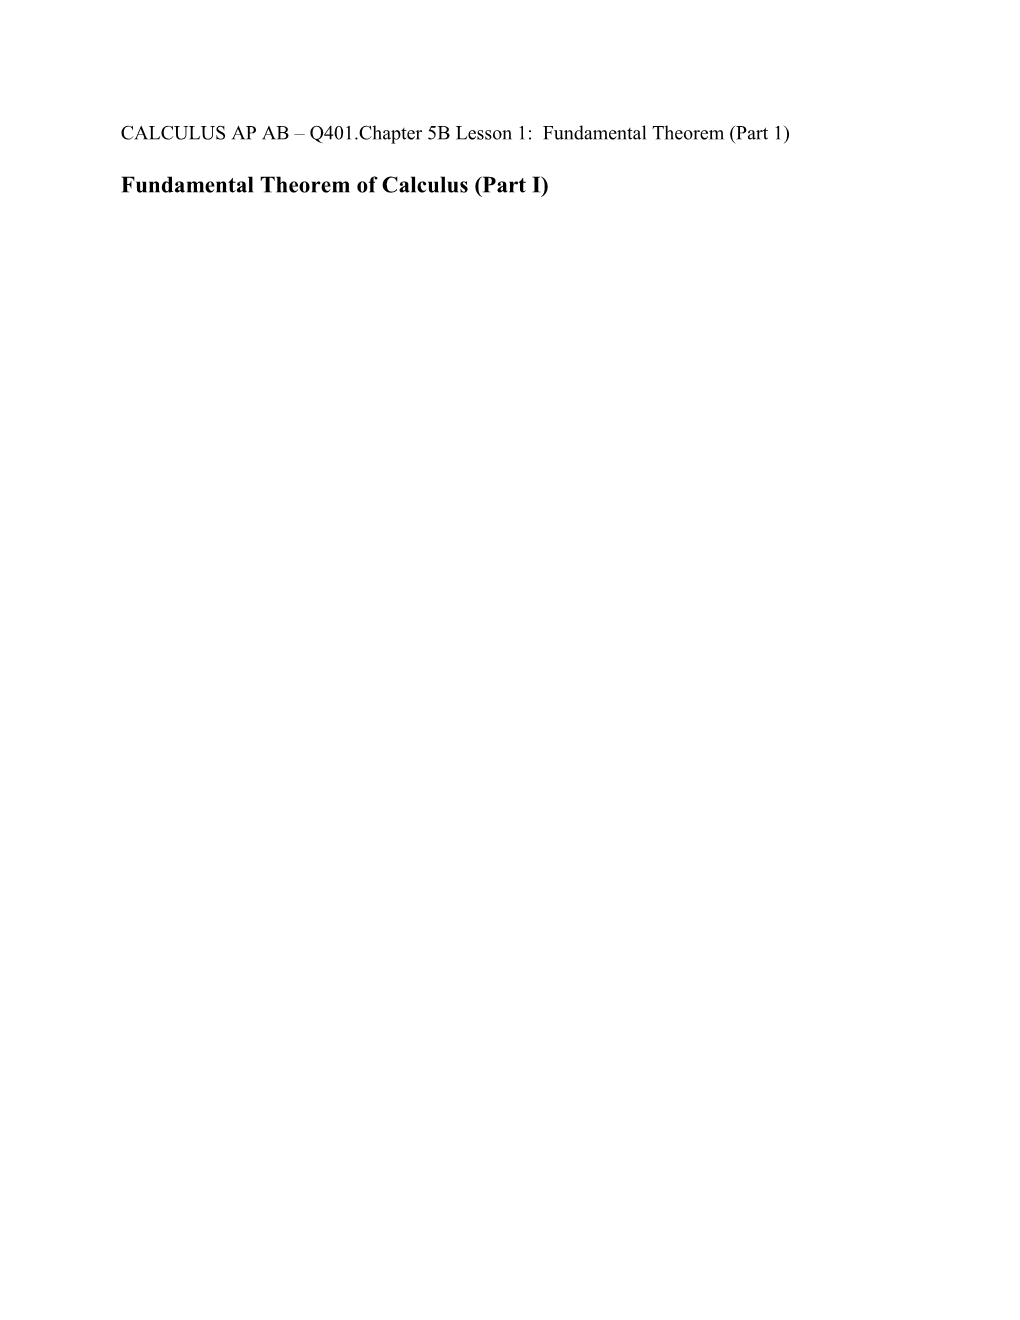 Fundamental Theorem of Calculus (Part I)